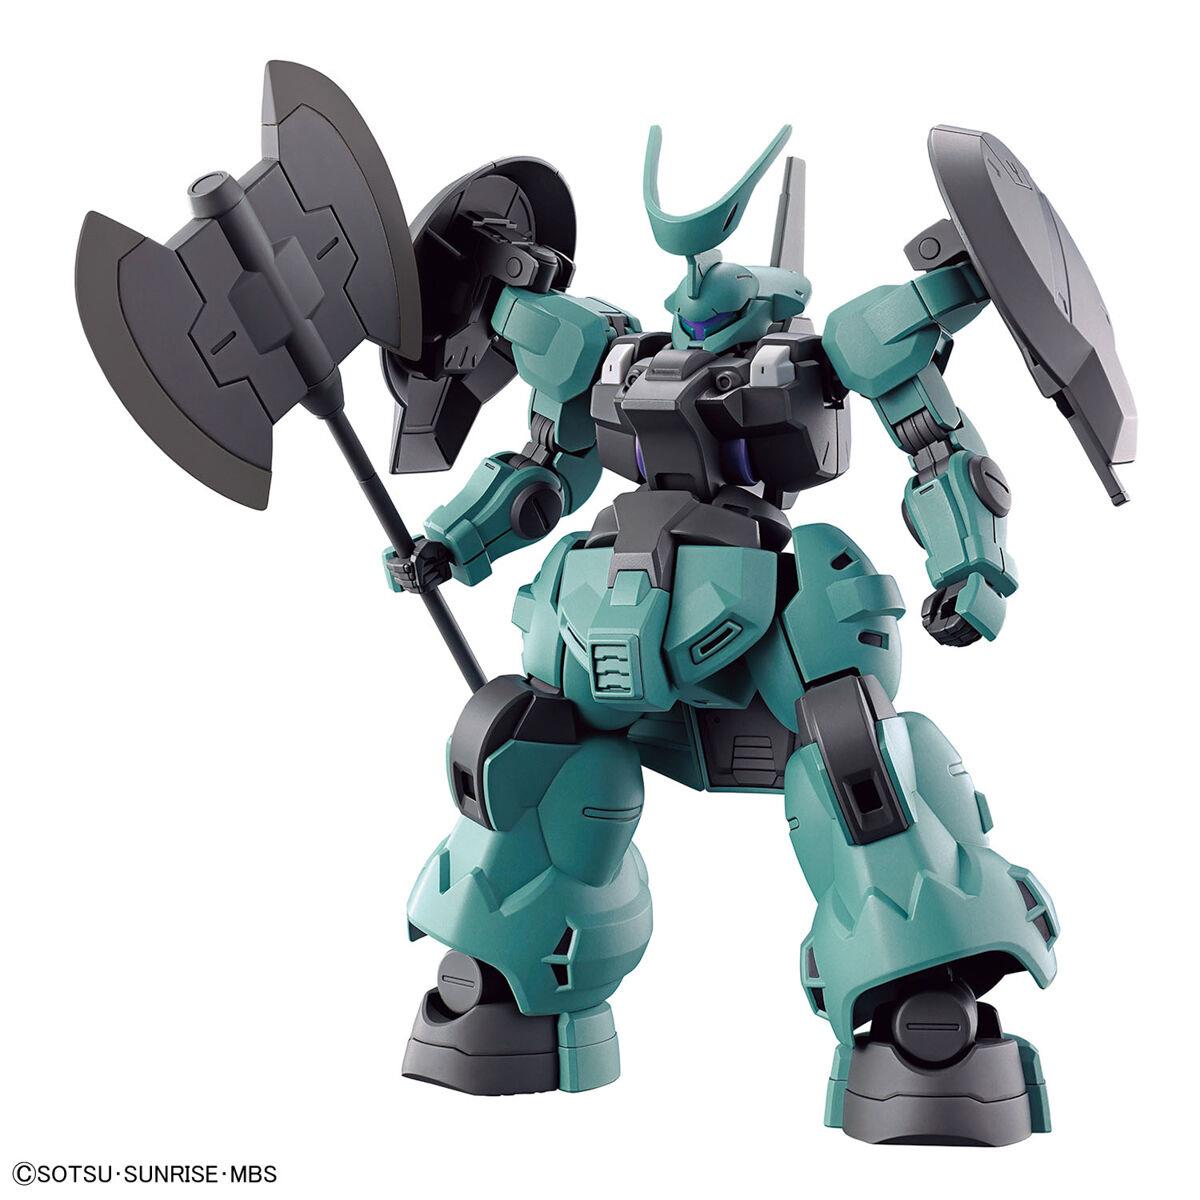 Gundam: Dilanza (Standard Type/Lauda's Dilanza) HG Model